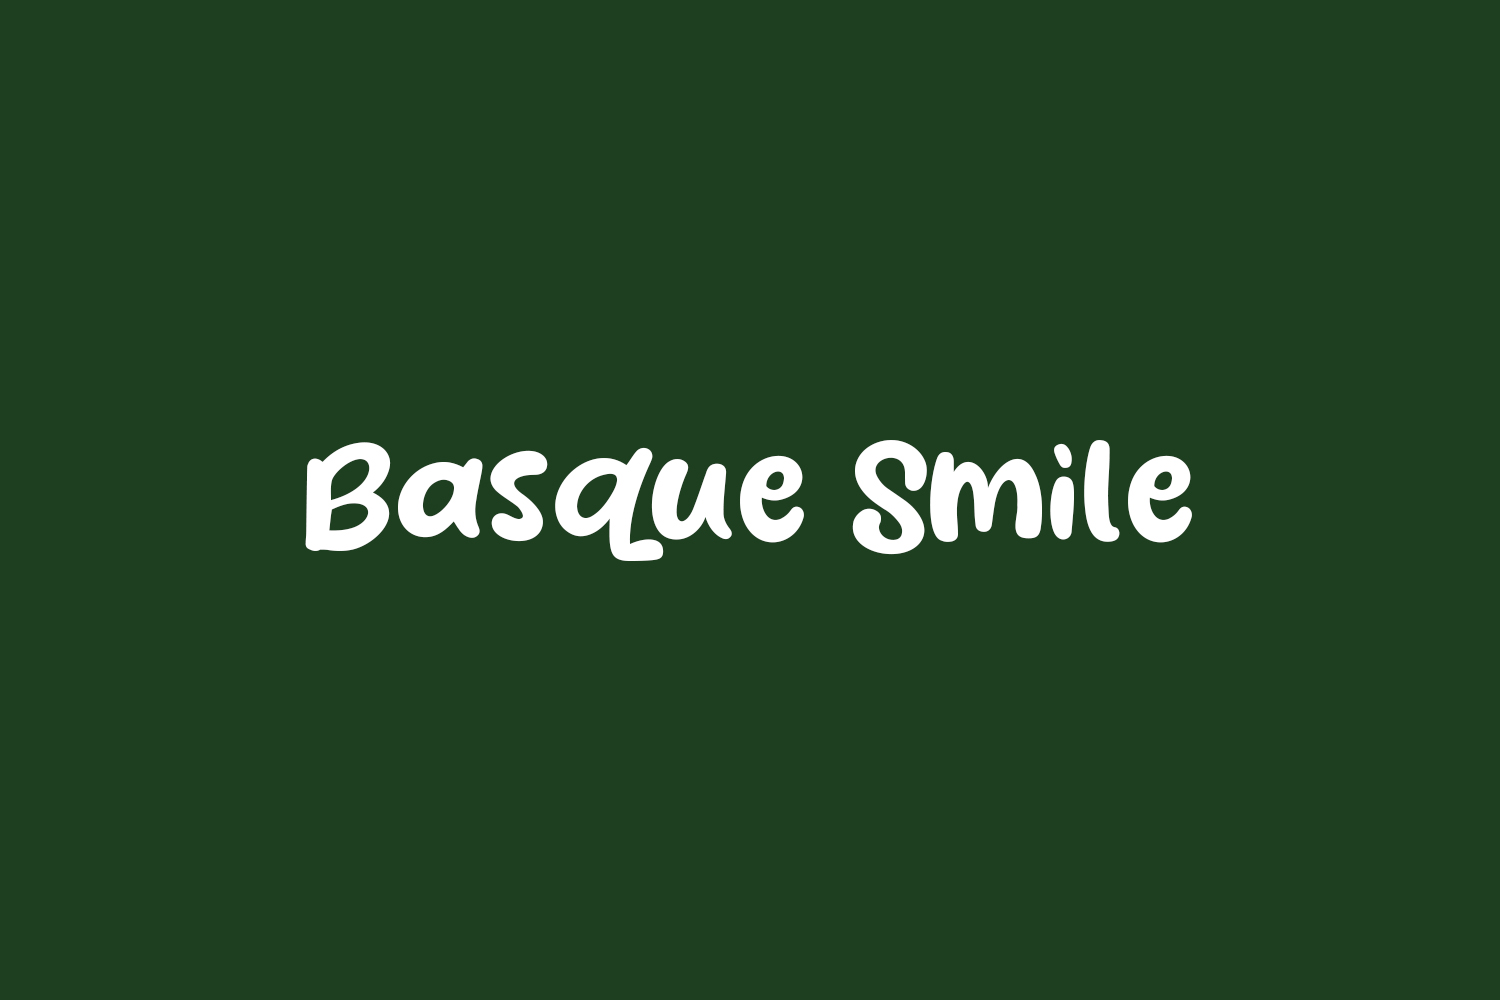 Basque Smile Free Font